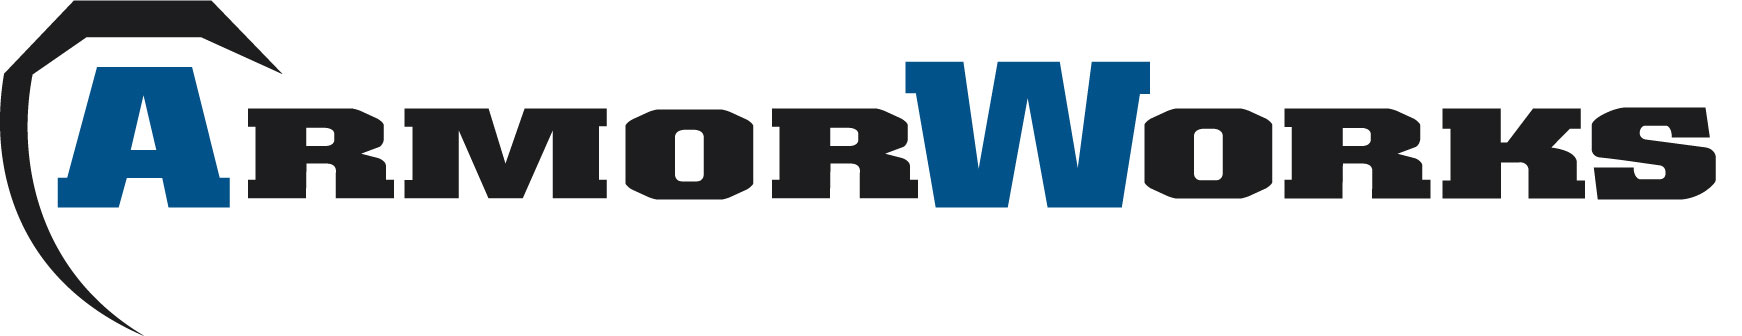 ArmorWorks logo Chandler Careers Hiring Arizona Material Specialist, Quality Inspector, Certified Weld Inspector, Welders